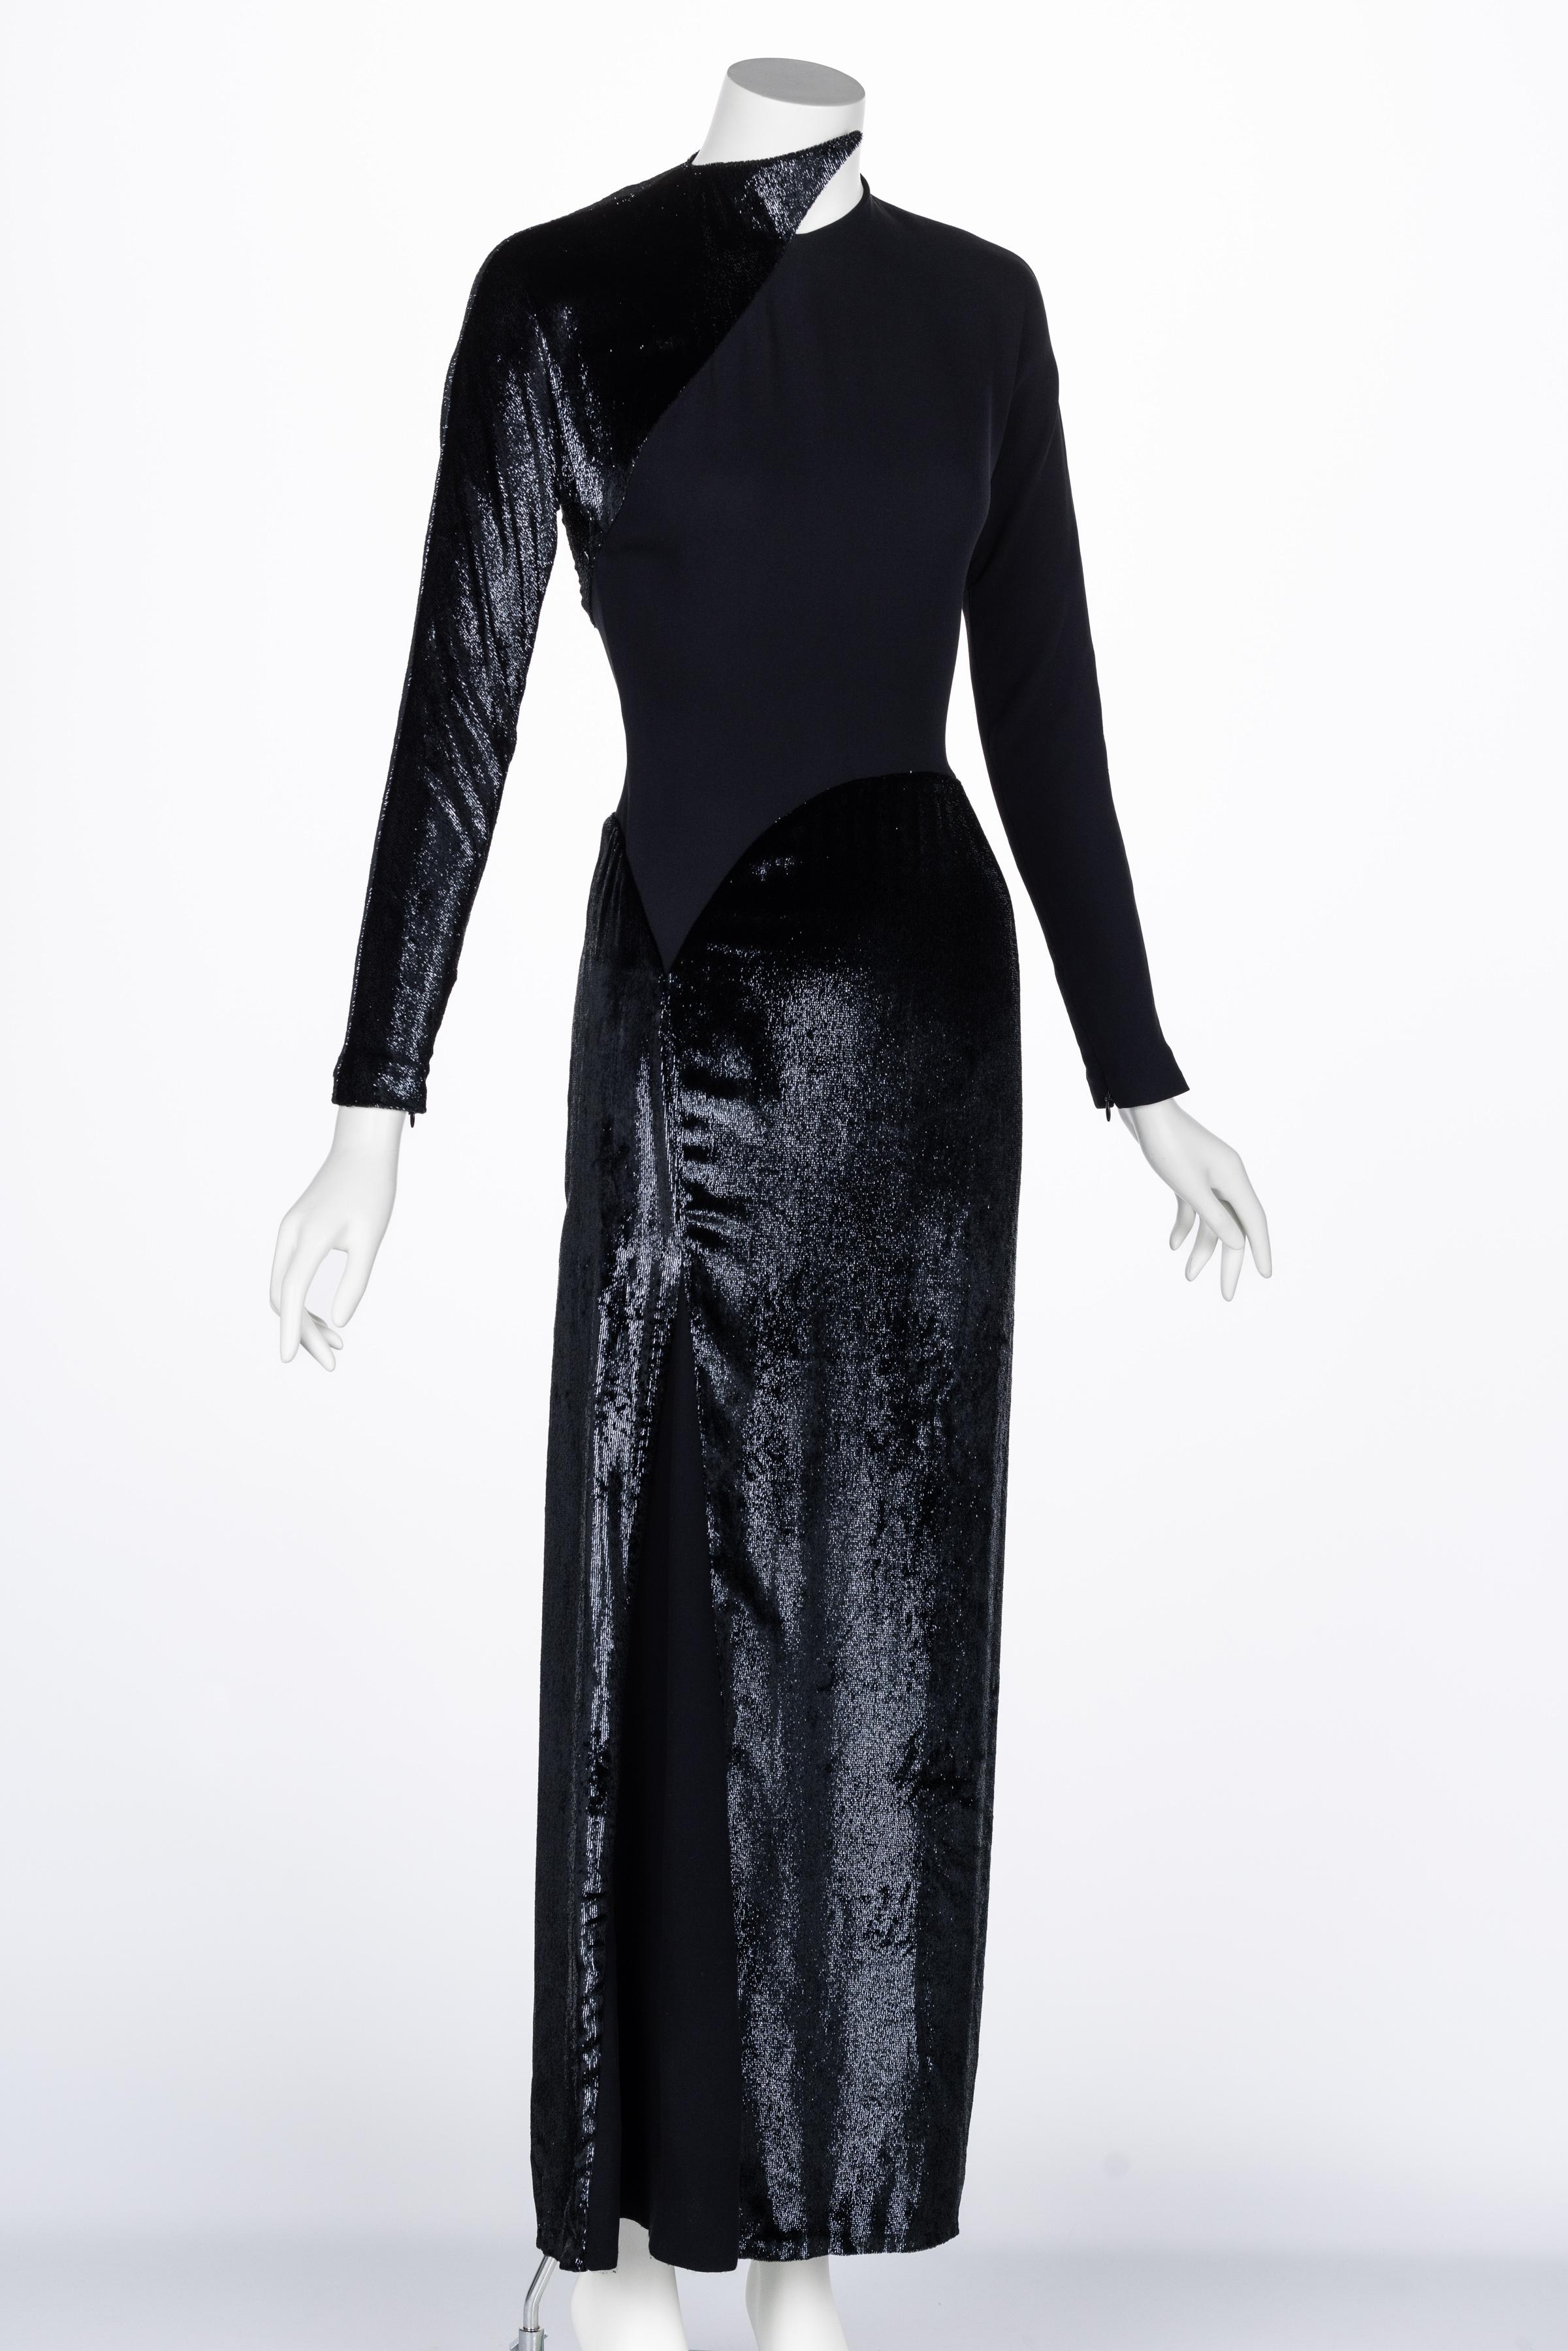 Geoffrey Beene Black Crepe Panne Velvet Dress 1990s In Good Condition For Sale In Boca Raton, FL